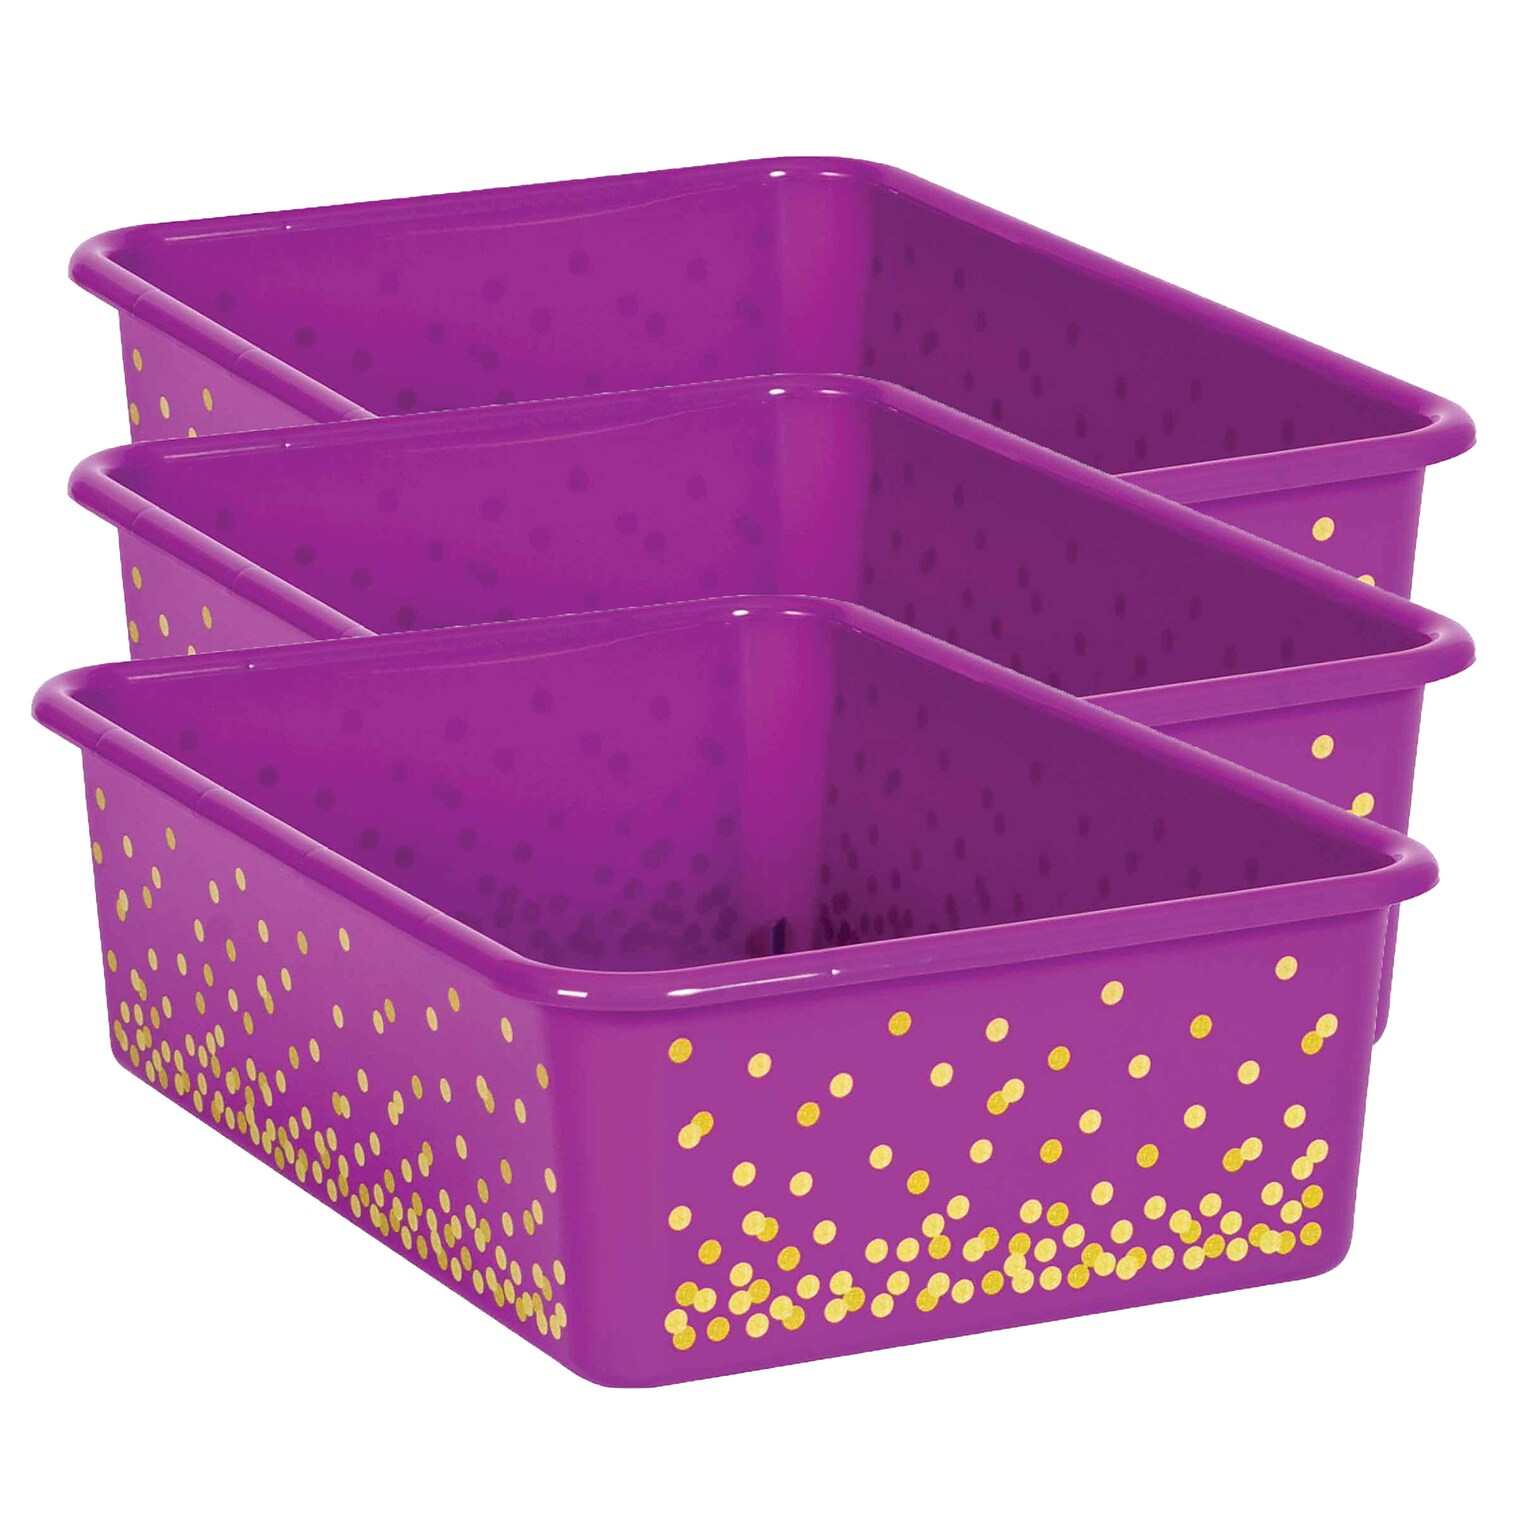 Teacher Created Resources Plastic Storage Bin, Large, 11.5 x 16.25 x 5, Purple Confetti, Pack of 3 (TCR20899-3)